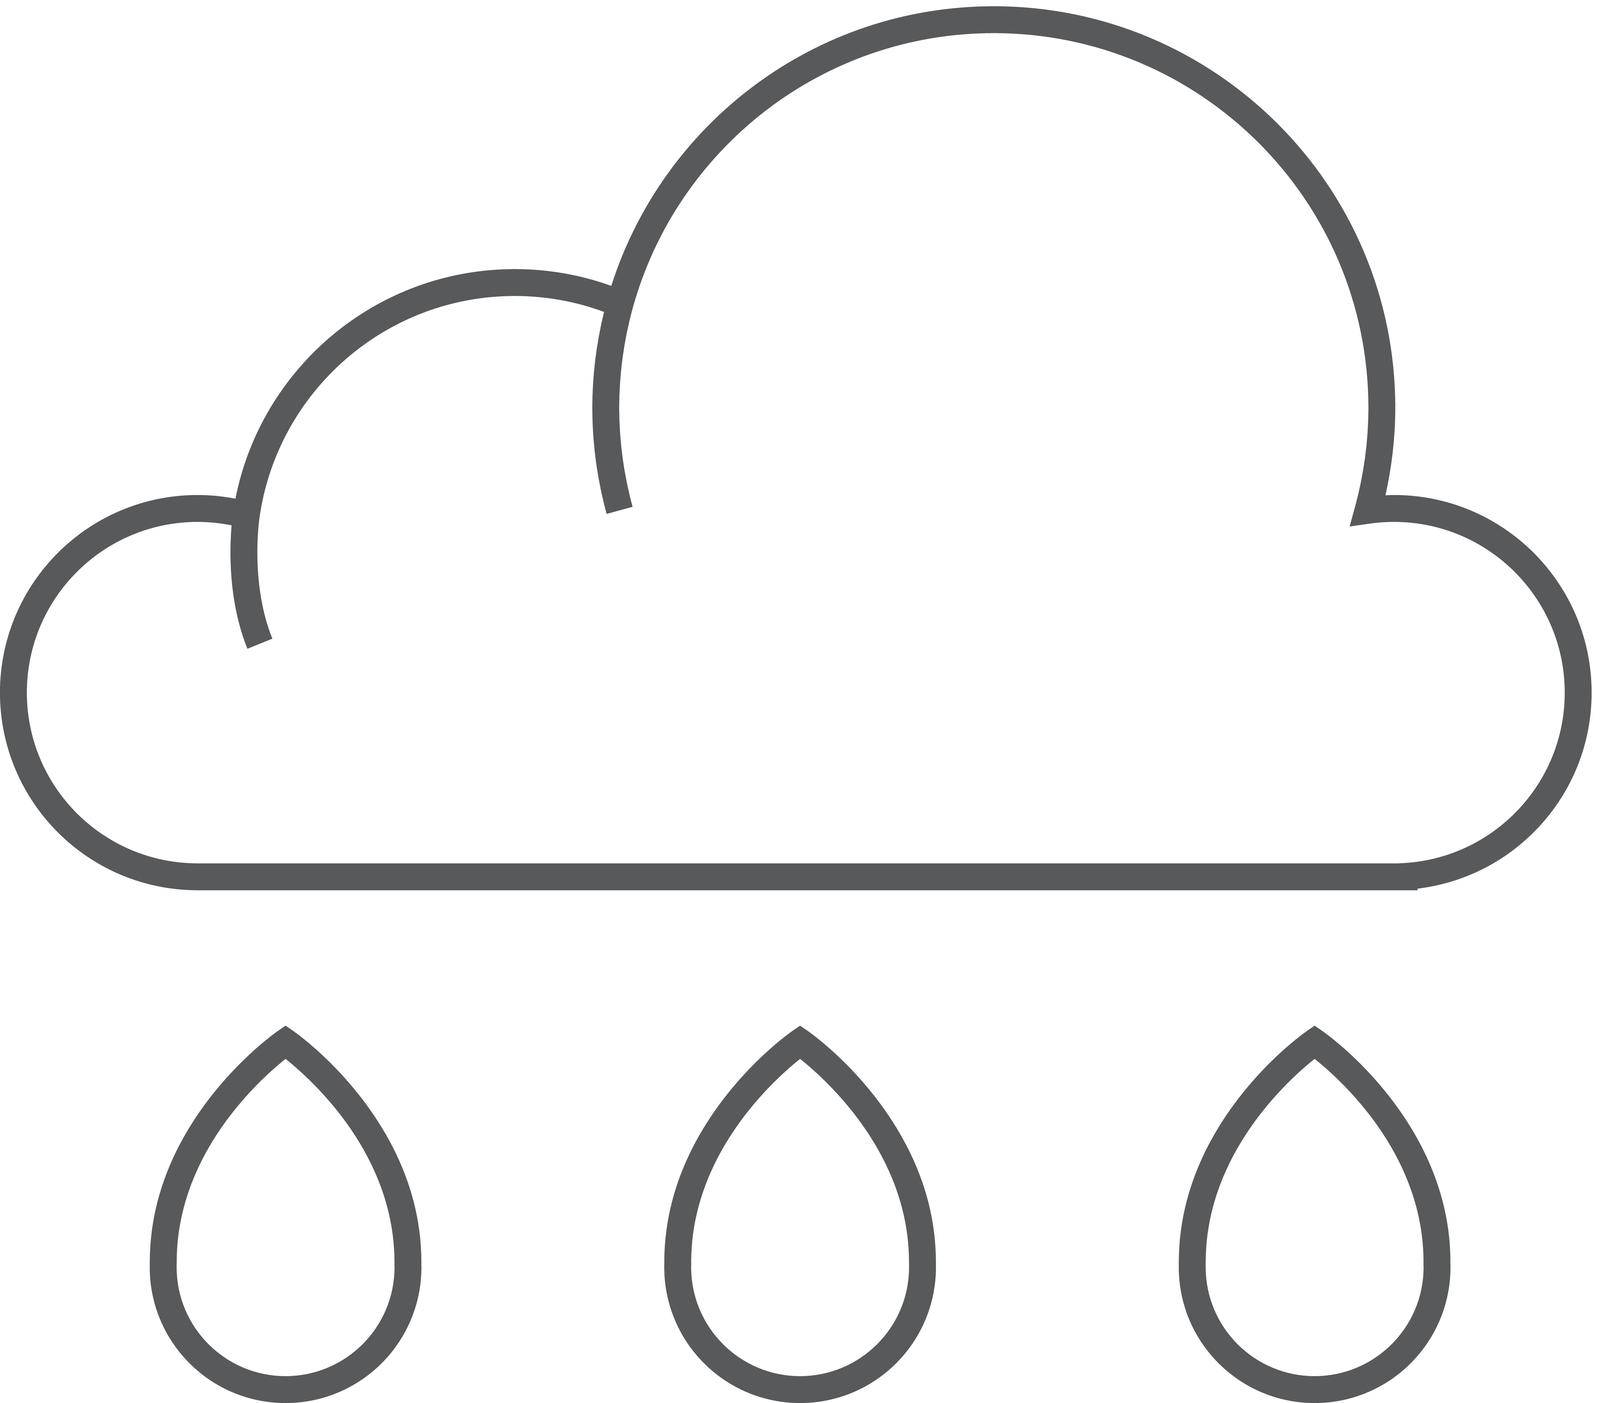 Rainy icon in thin outline style. Season forecast monsoon wet meteorology